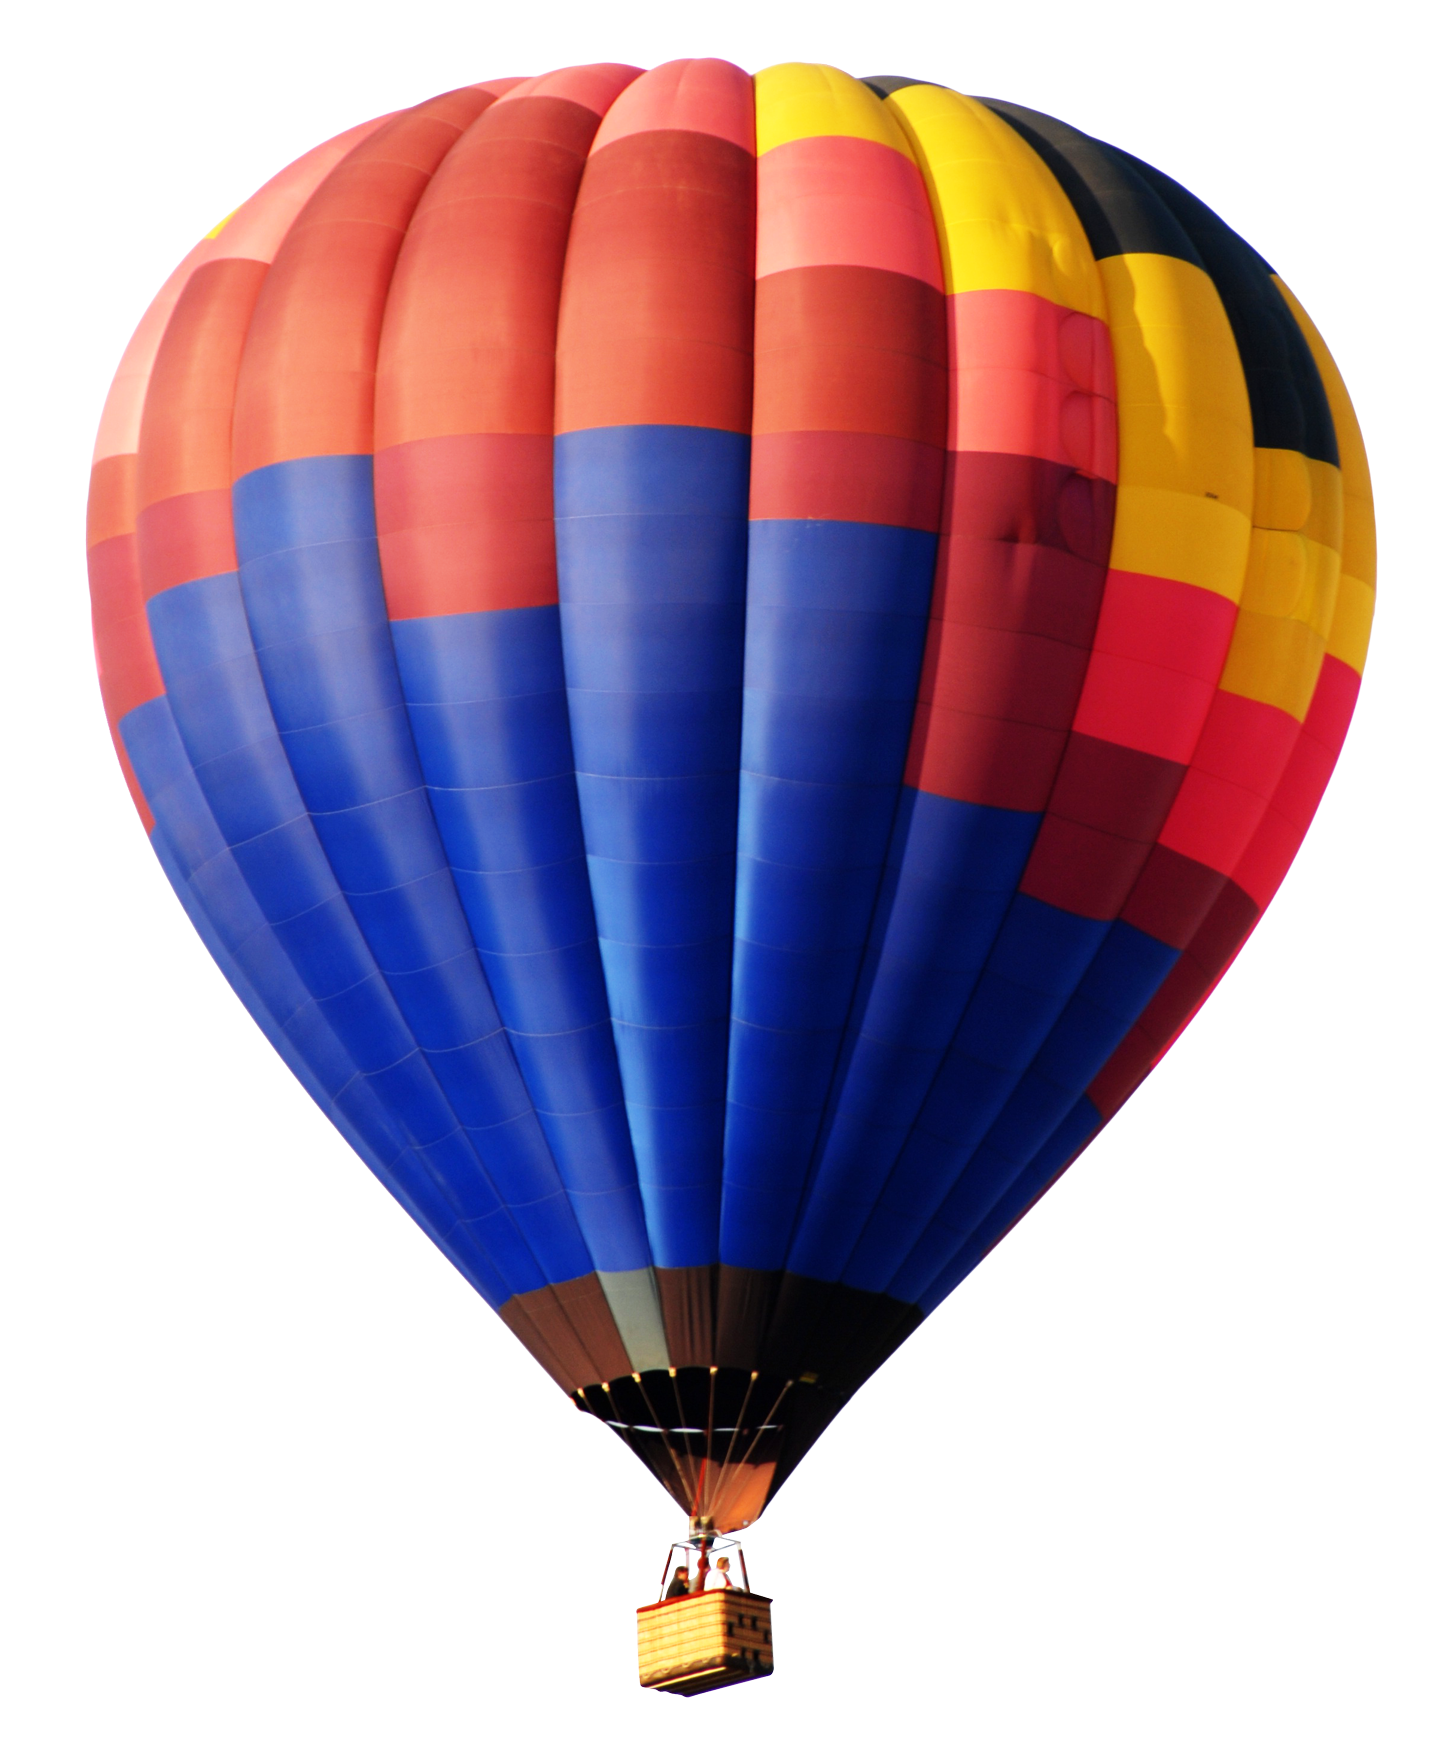 Air balloon PNG image free Download 